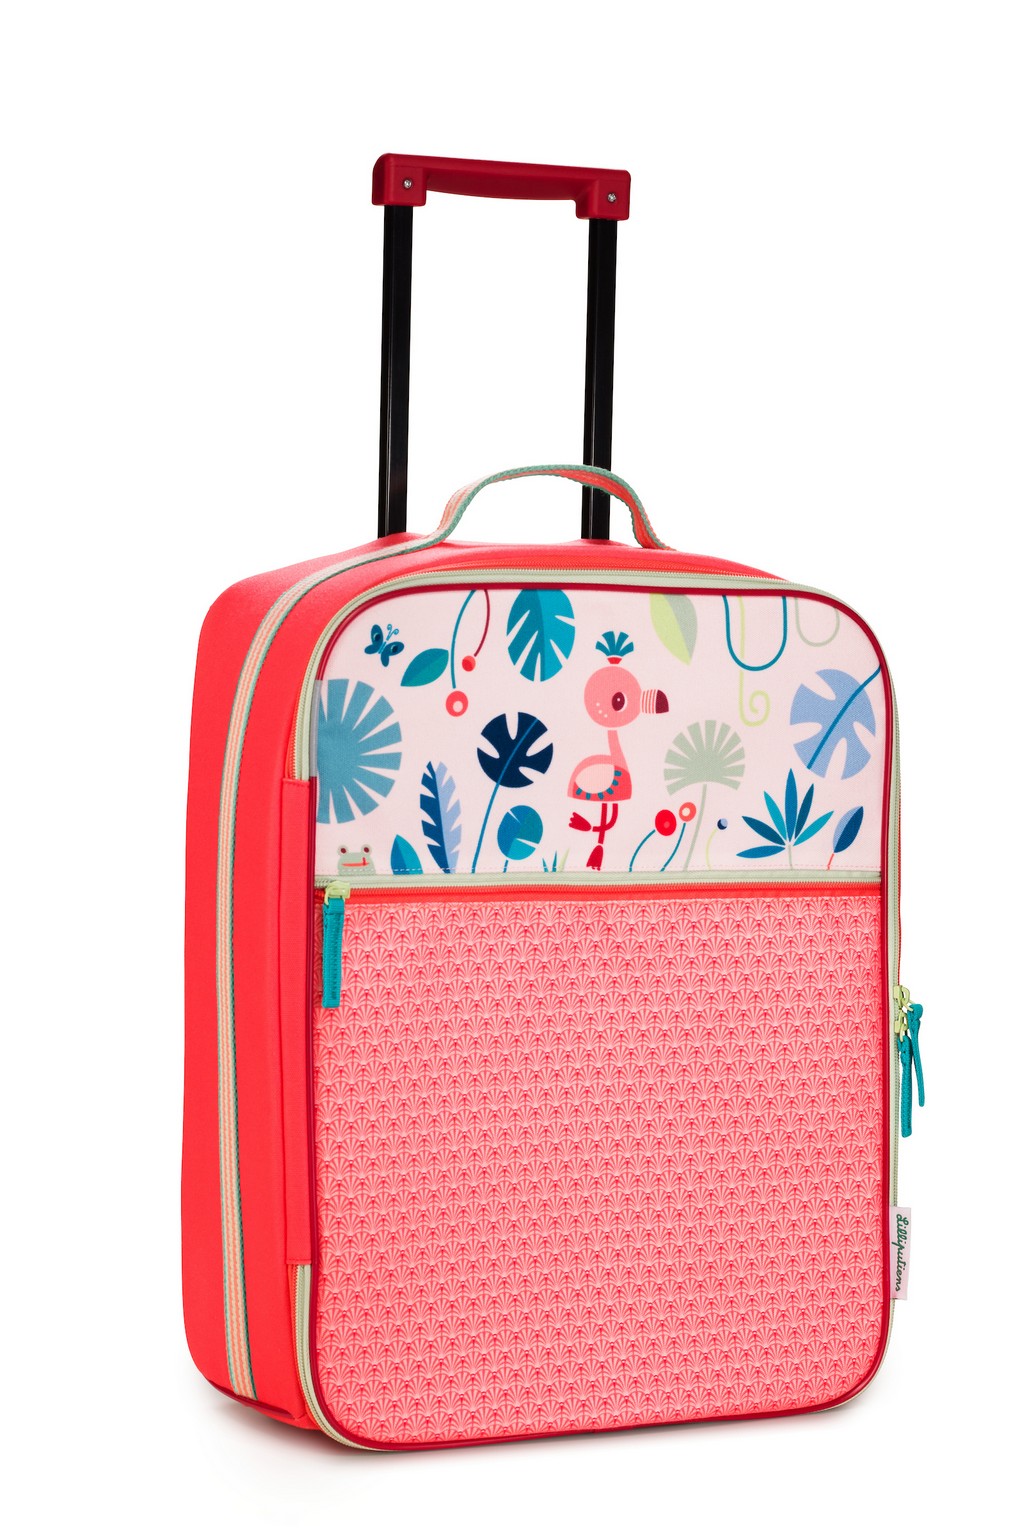 Чемодан Lilliputiens Фламинго Анаис, на колесиках, розовый, 84443 чемодан ninetygo rhine luggage 20 розовый